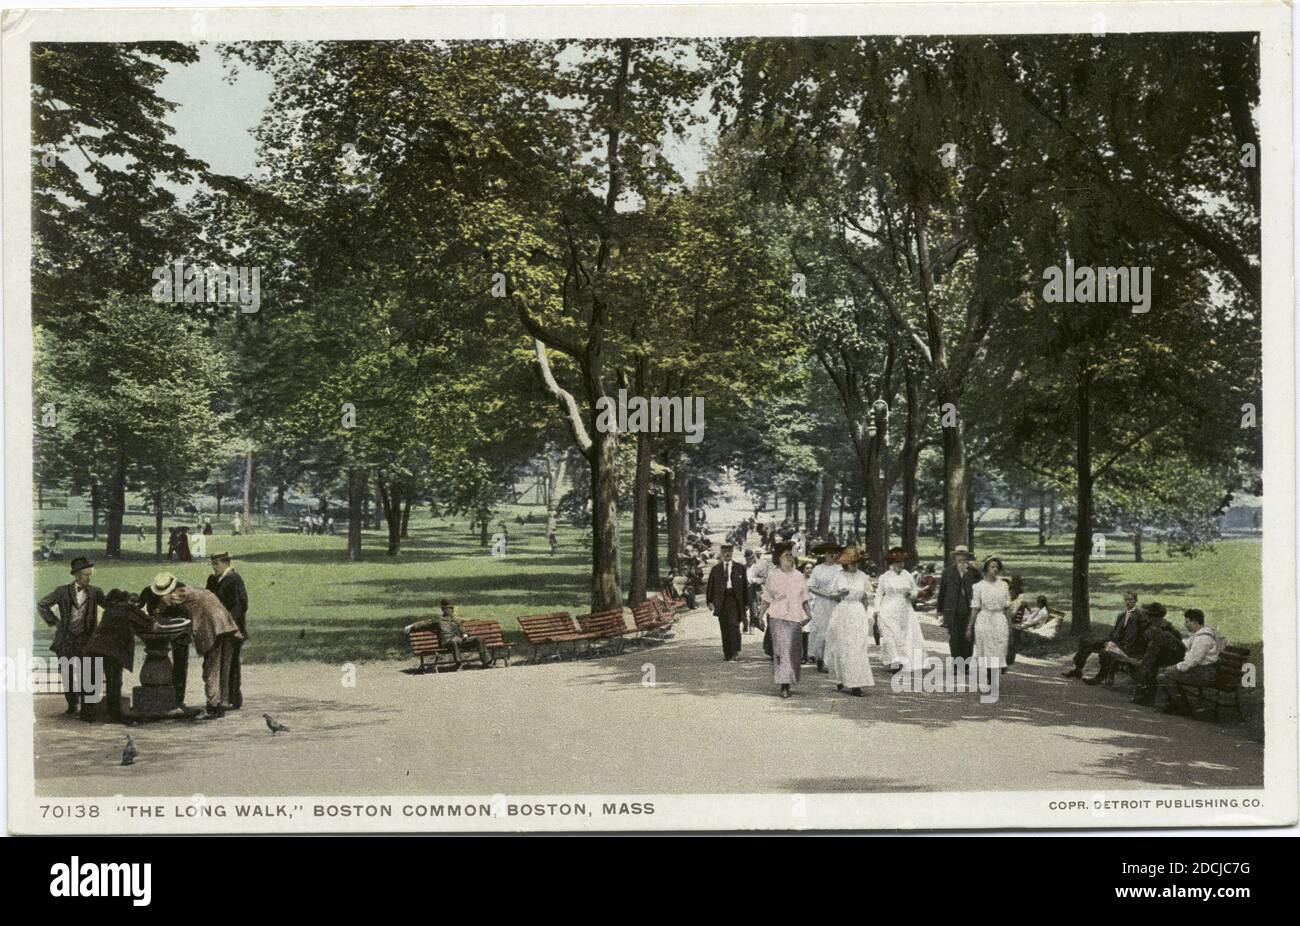 The Long Walk, Boston Common, Boston, Mass., Standbild, Postkarten, 1898 - 1931 Stockfoto